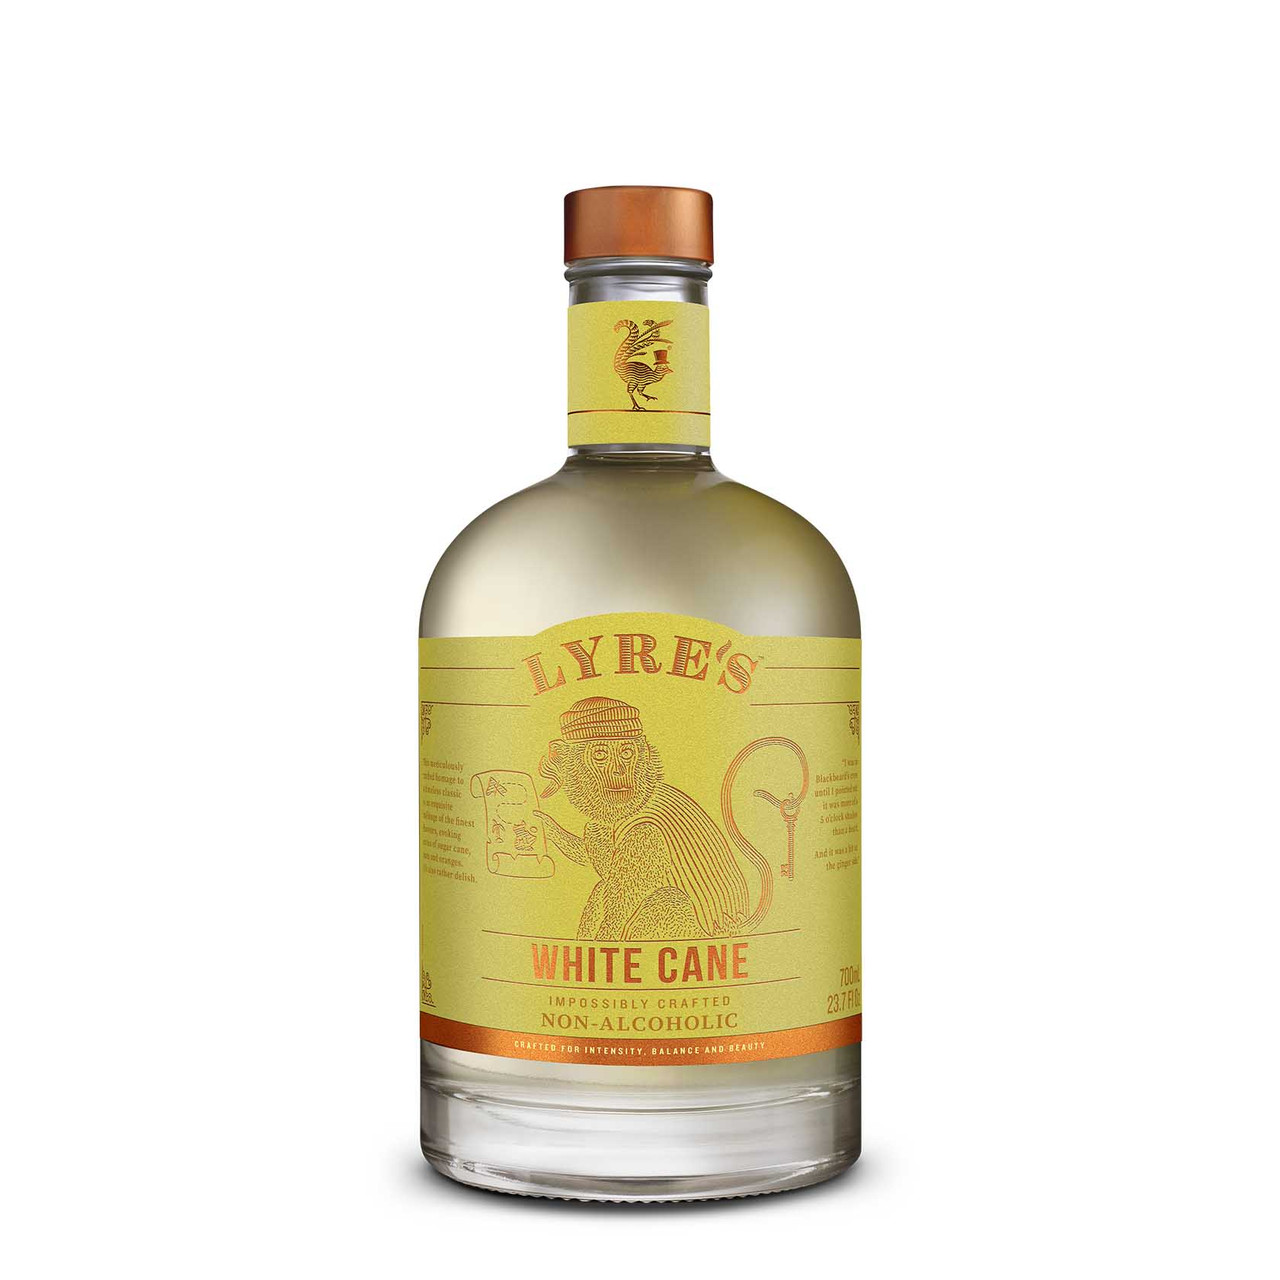 Lyre's Non-Alcoholic White Cane